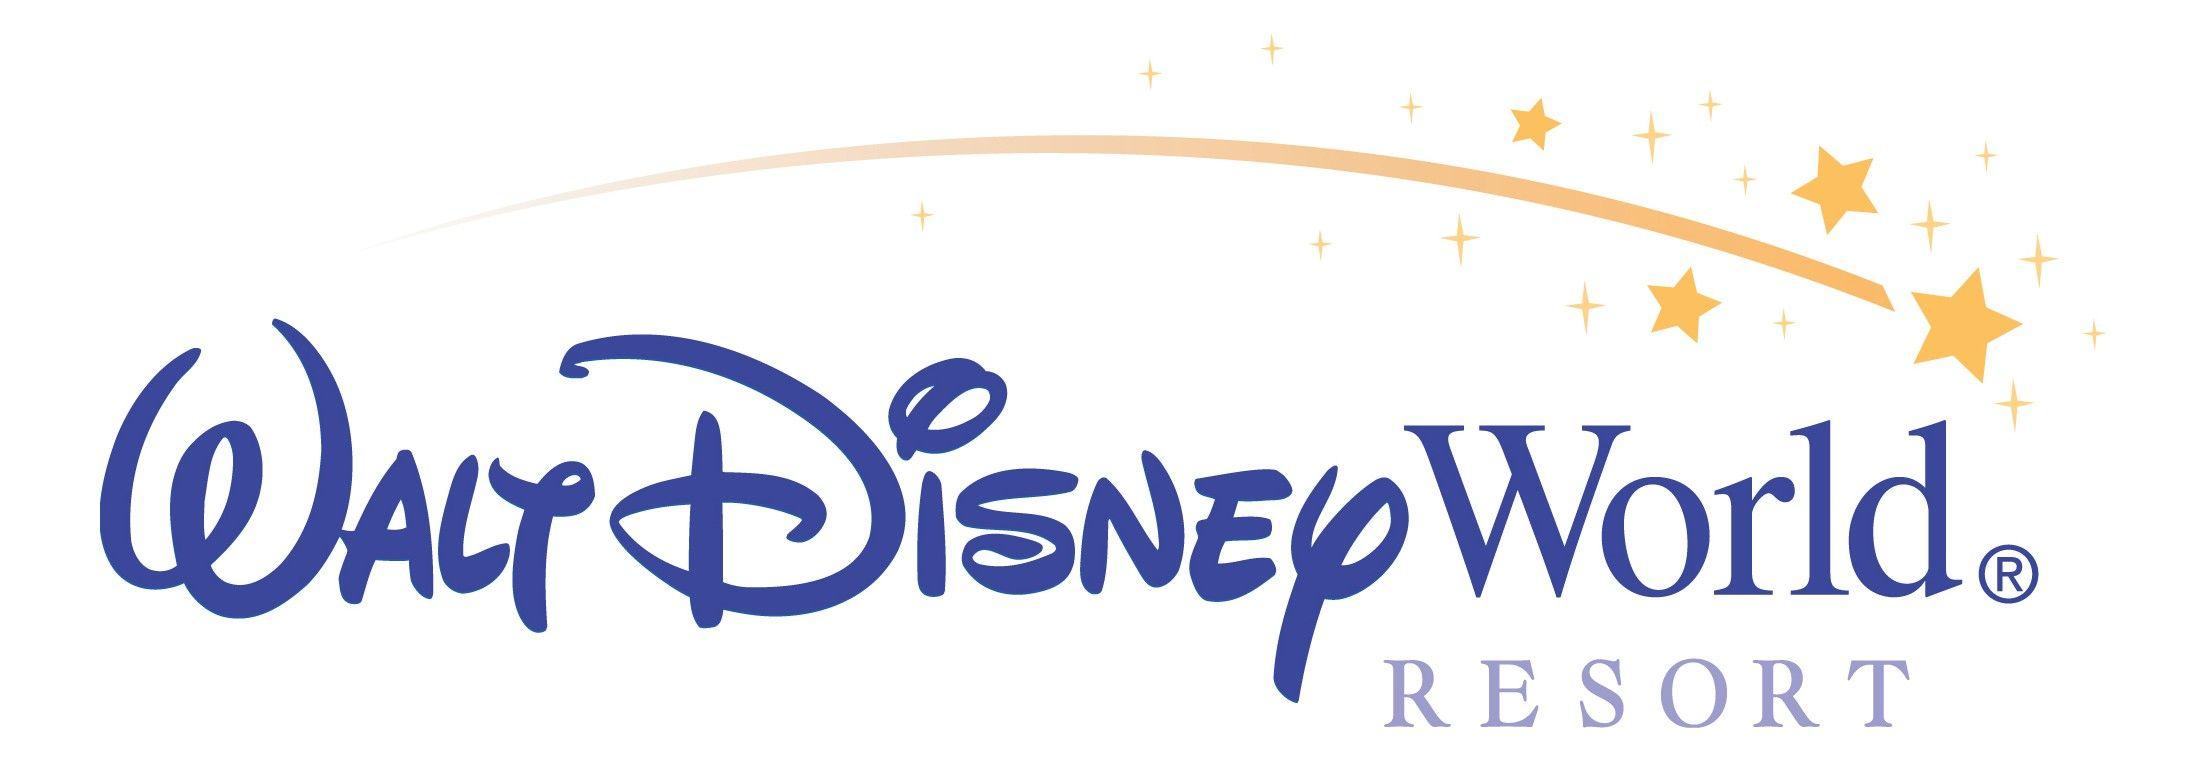 Disneyland Orlando Logo - Video of the Best Looking Guys in Skirts at Walt Disney World ...